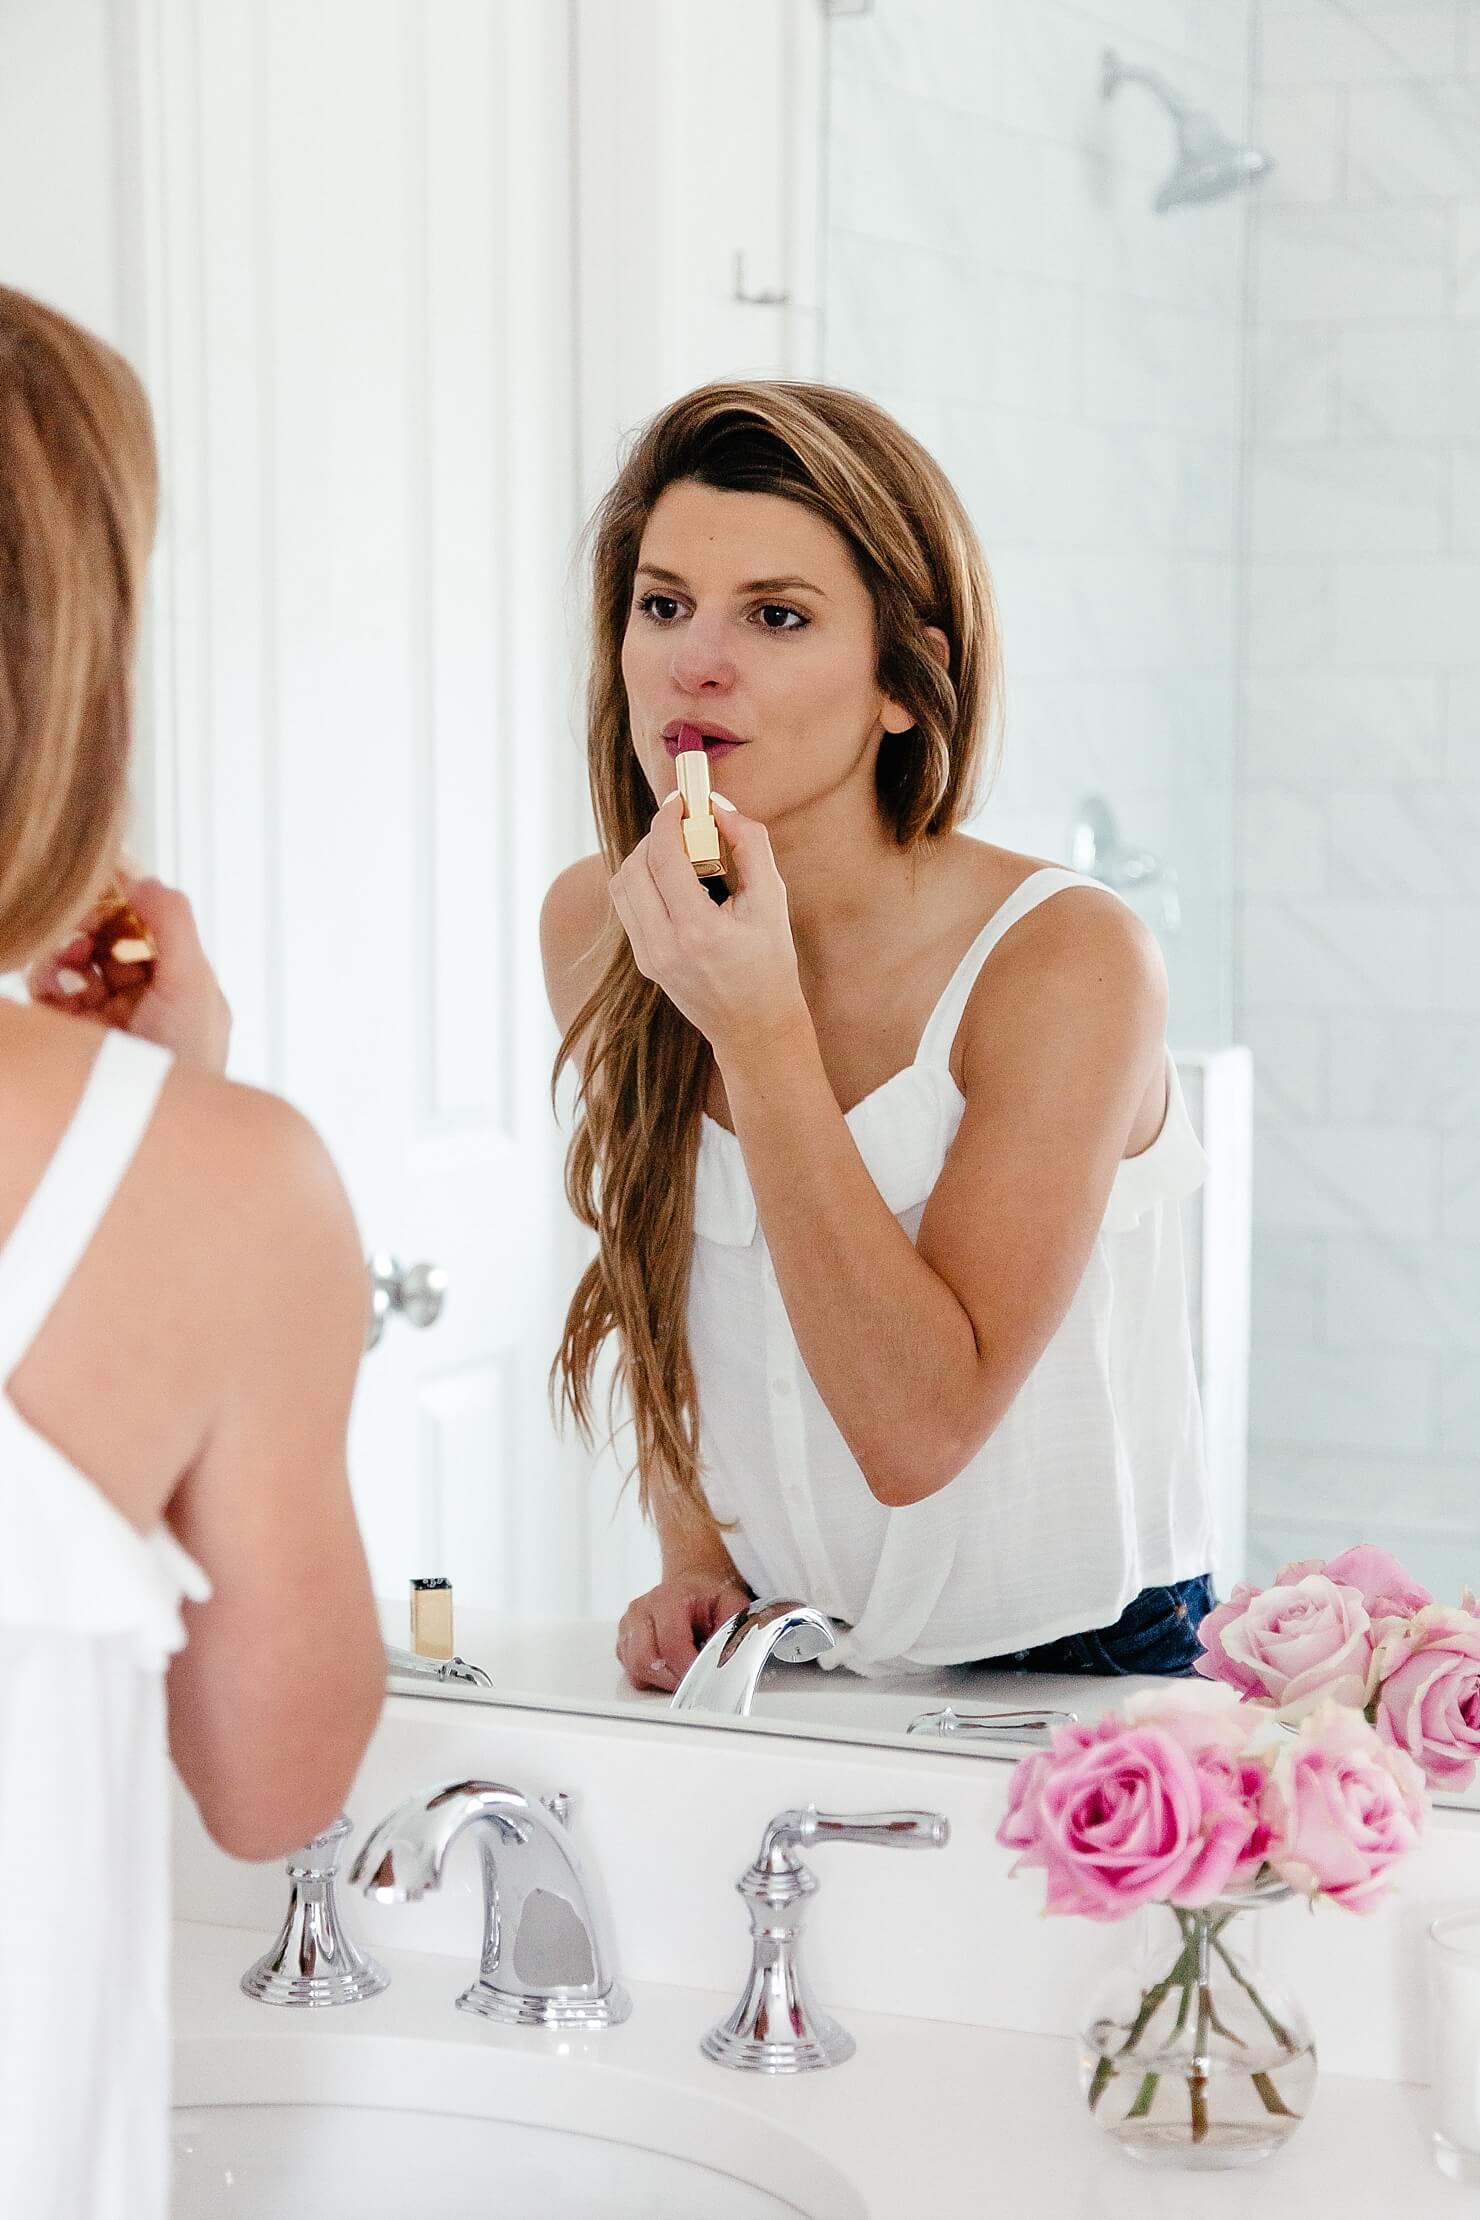 how to make your makeup last longer, brighton keller bathroom